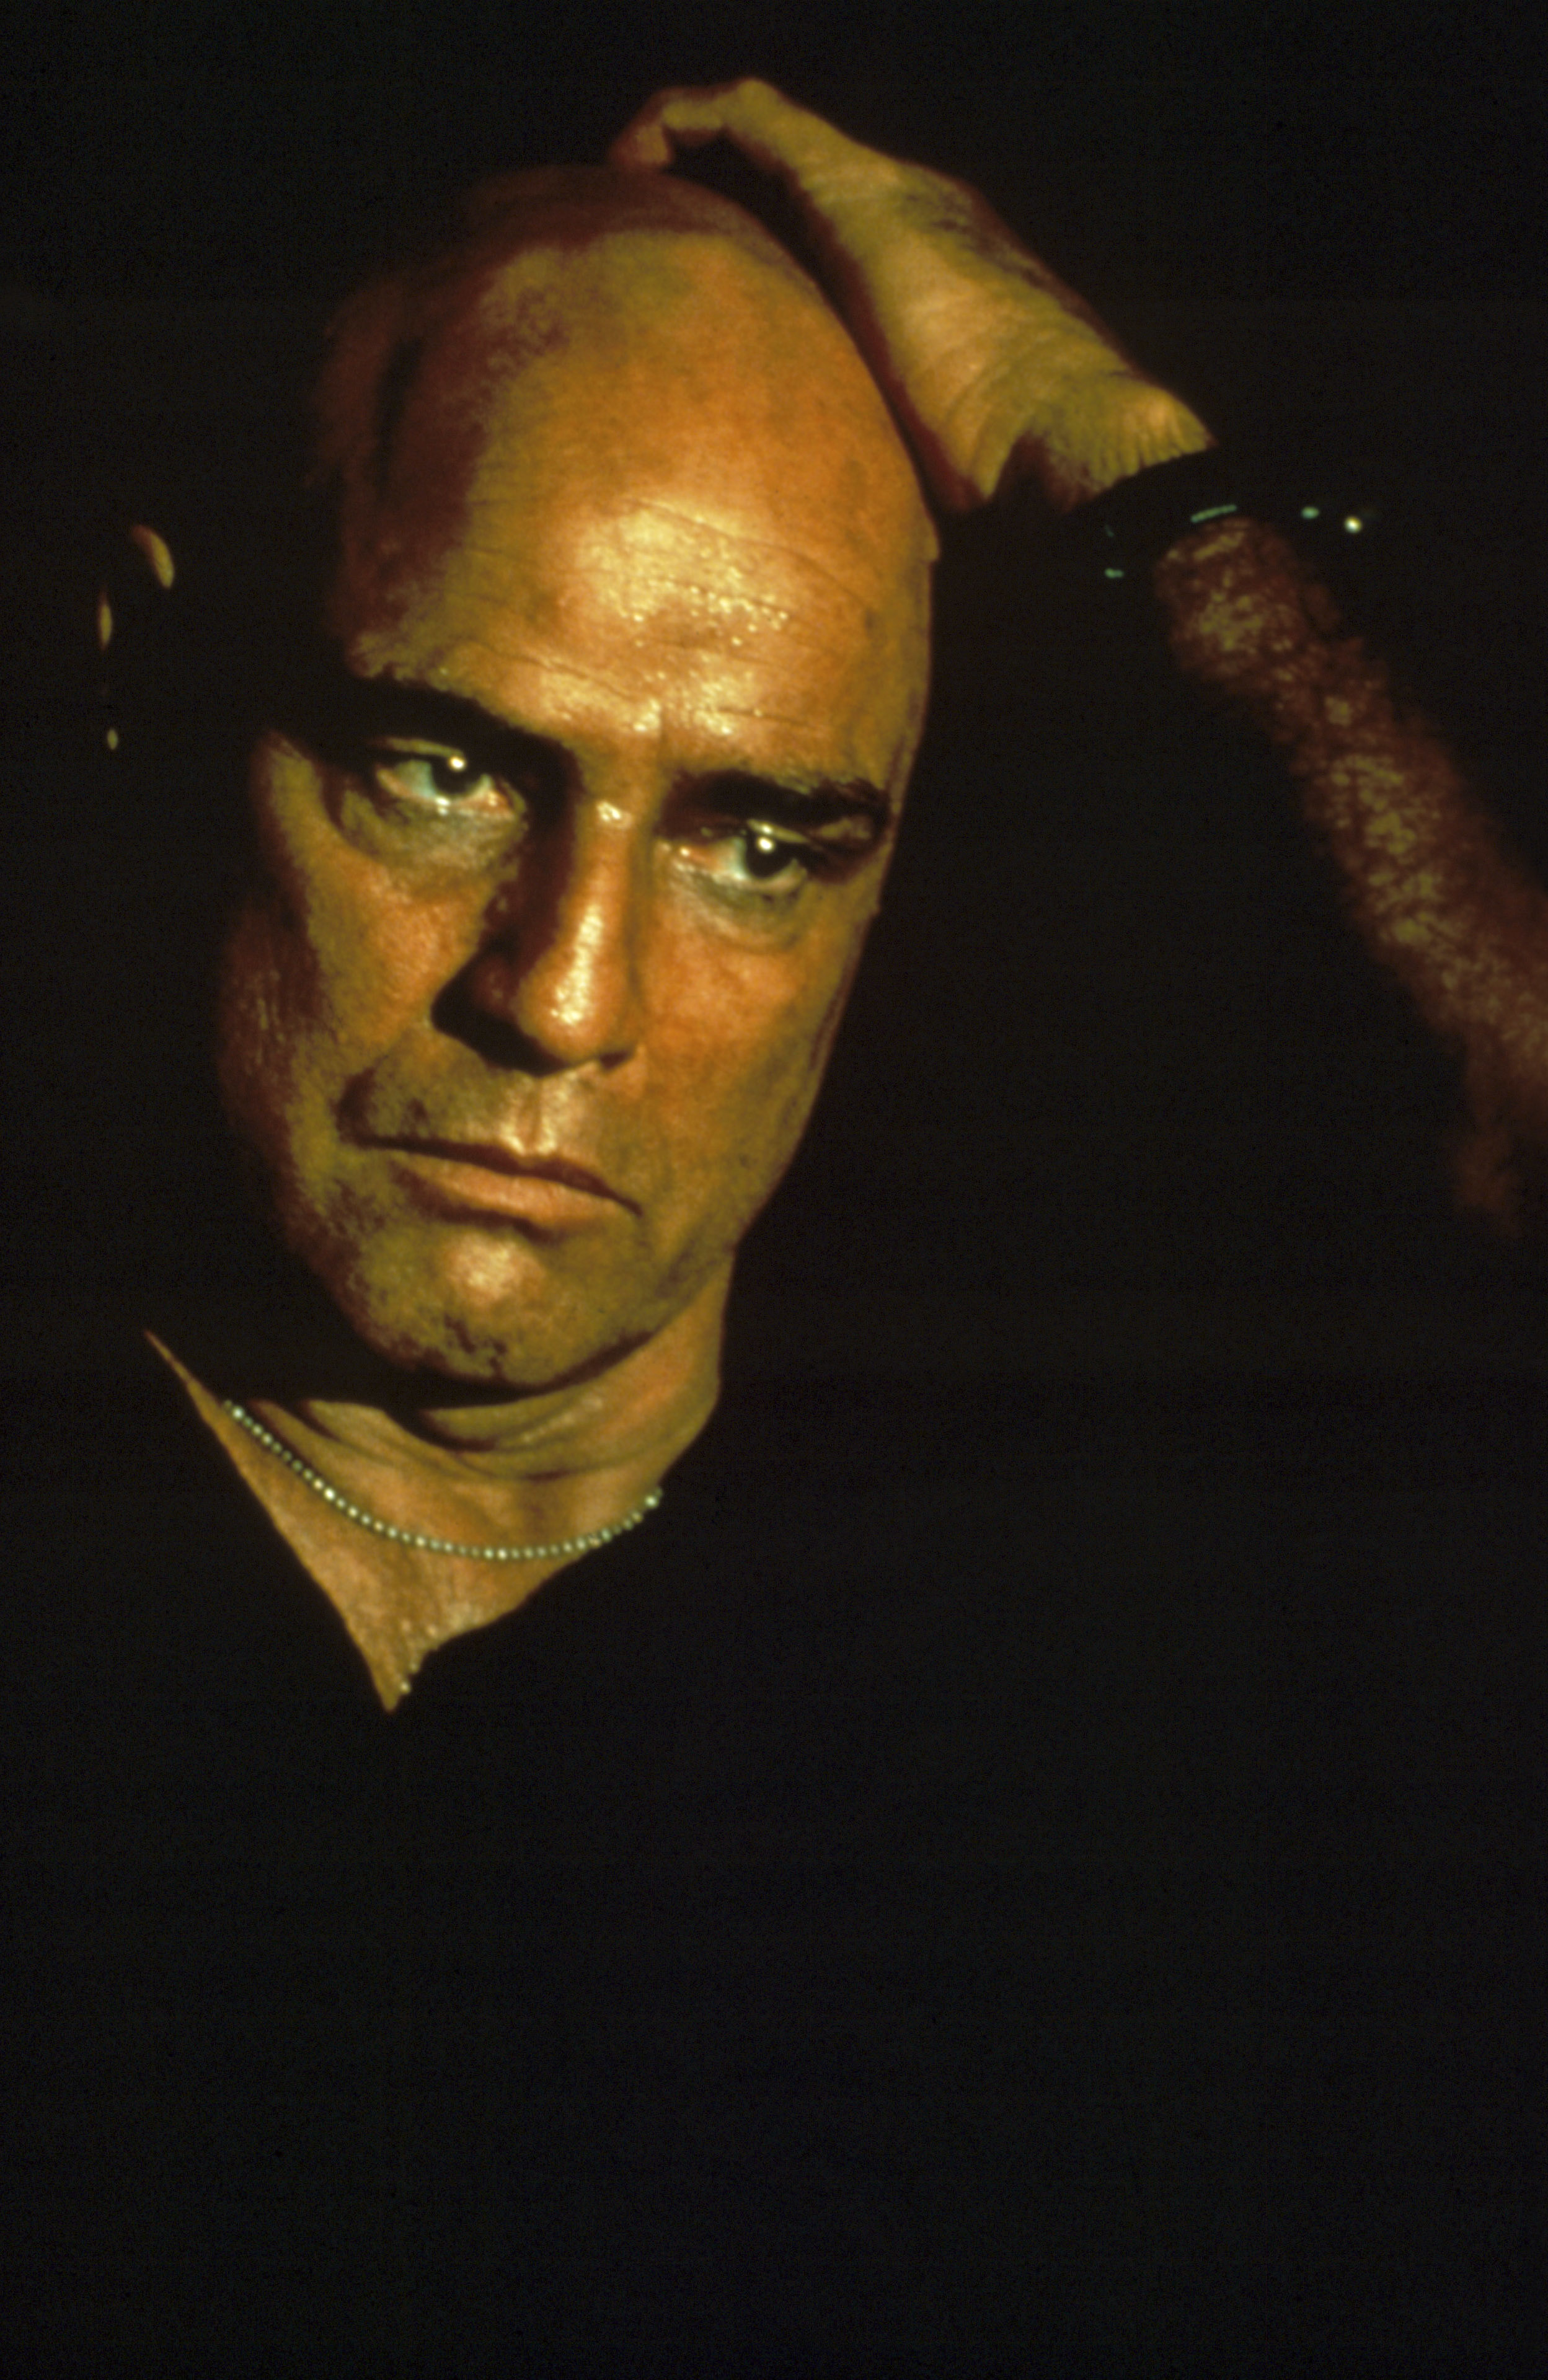 Closeup of Marlon Brando